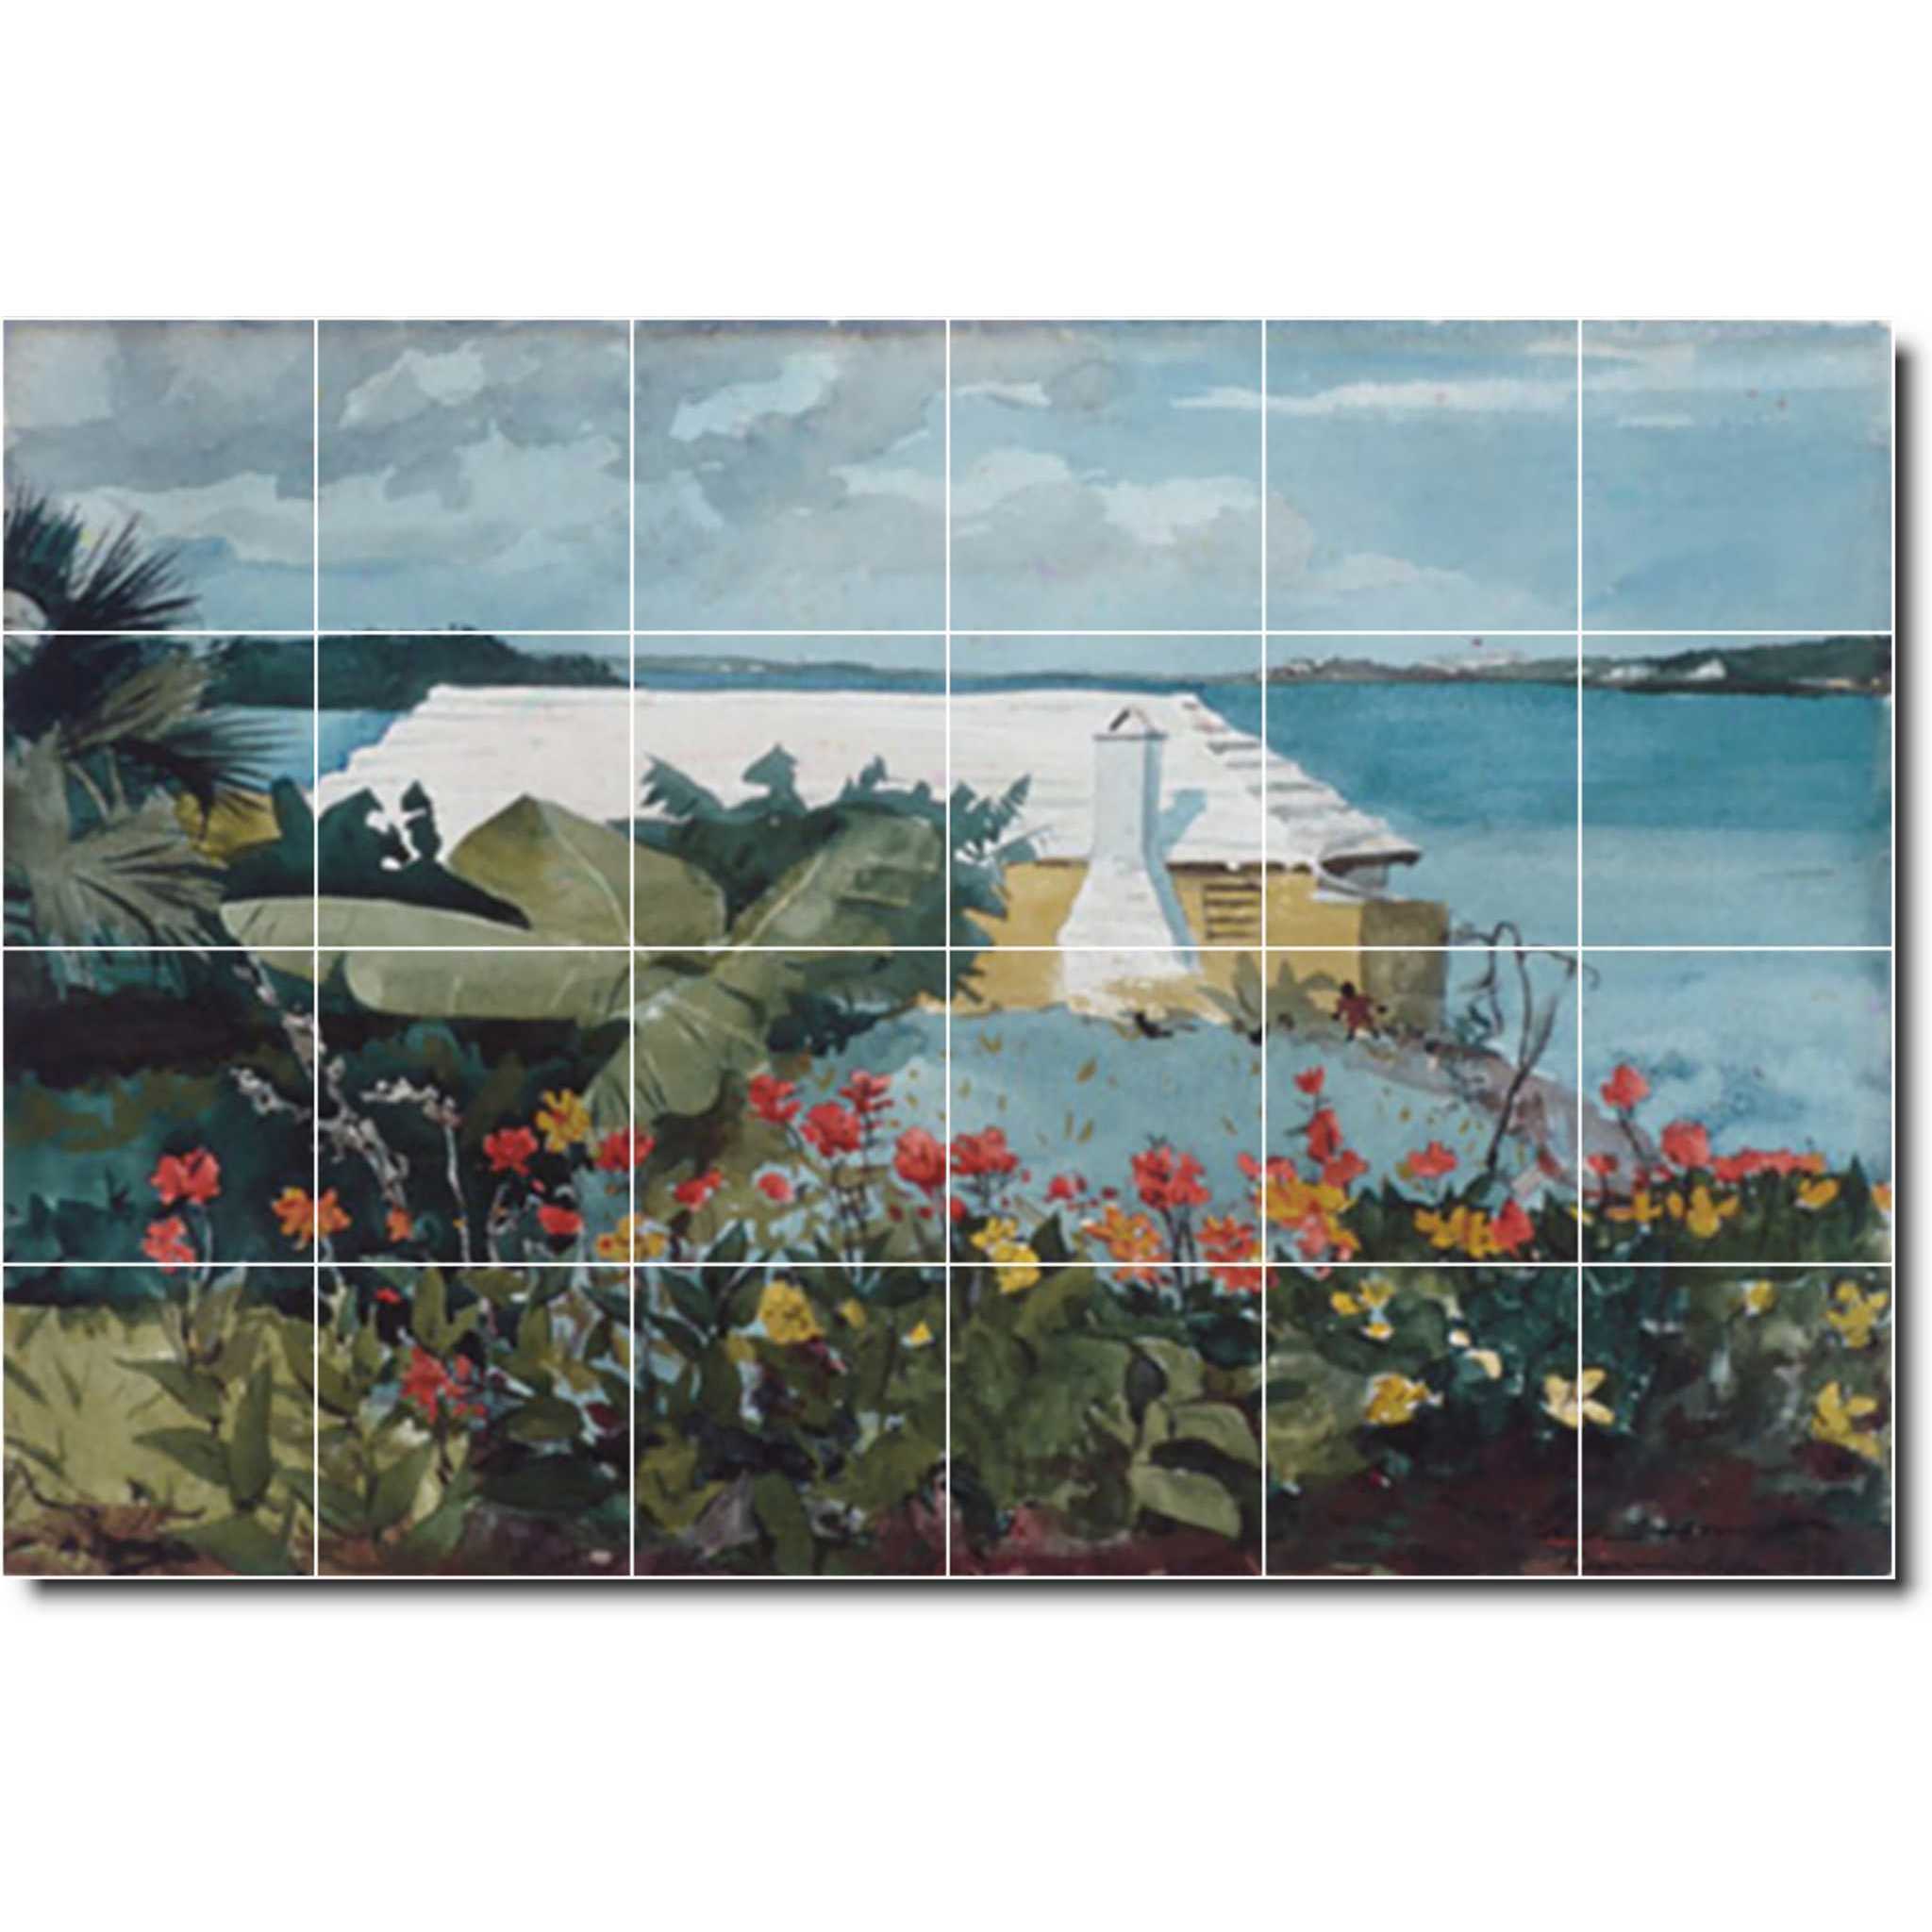 Winslow Homer Garden Painting Ceramic Tile Mural P04390-XL. 72"W x 48"H (24) 12x12 tiles